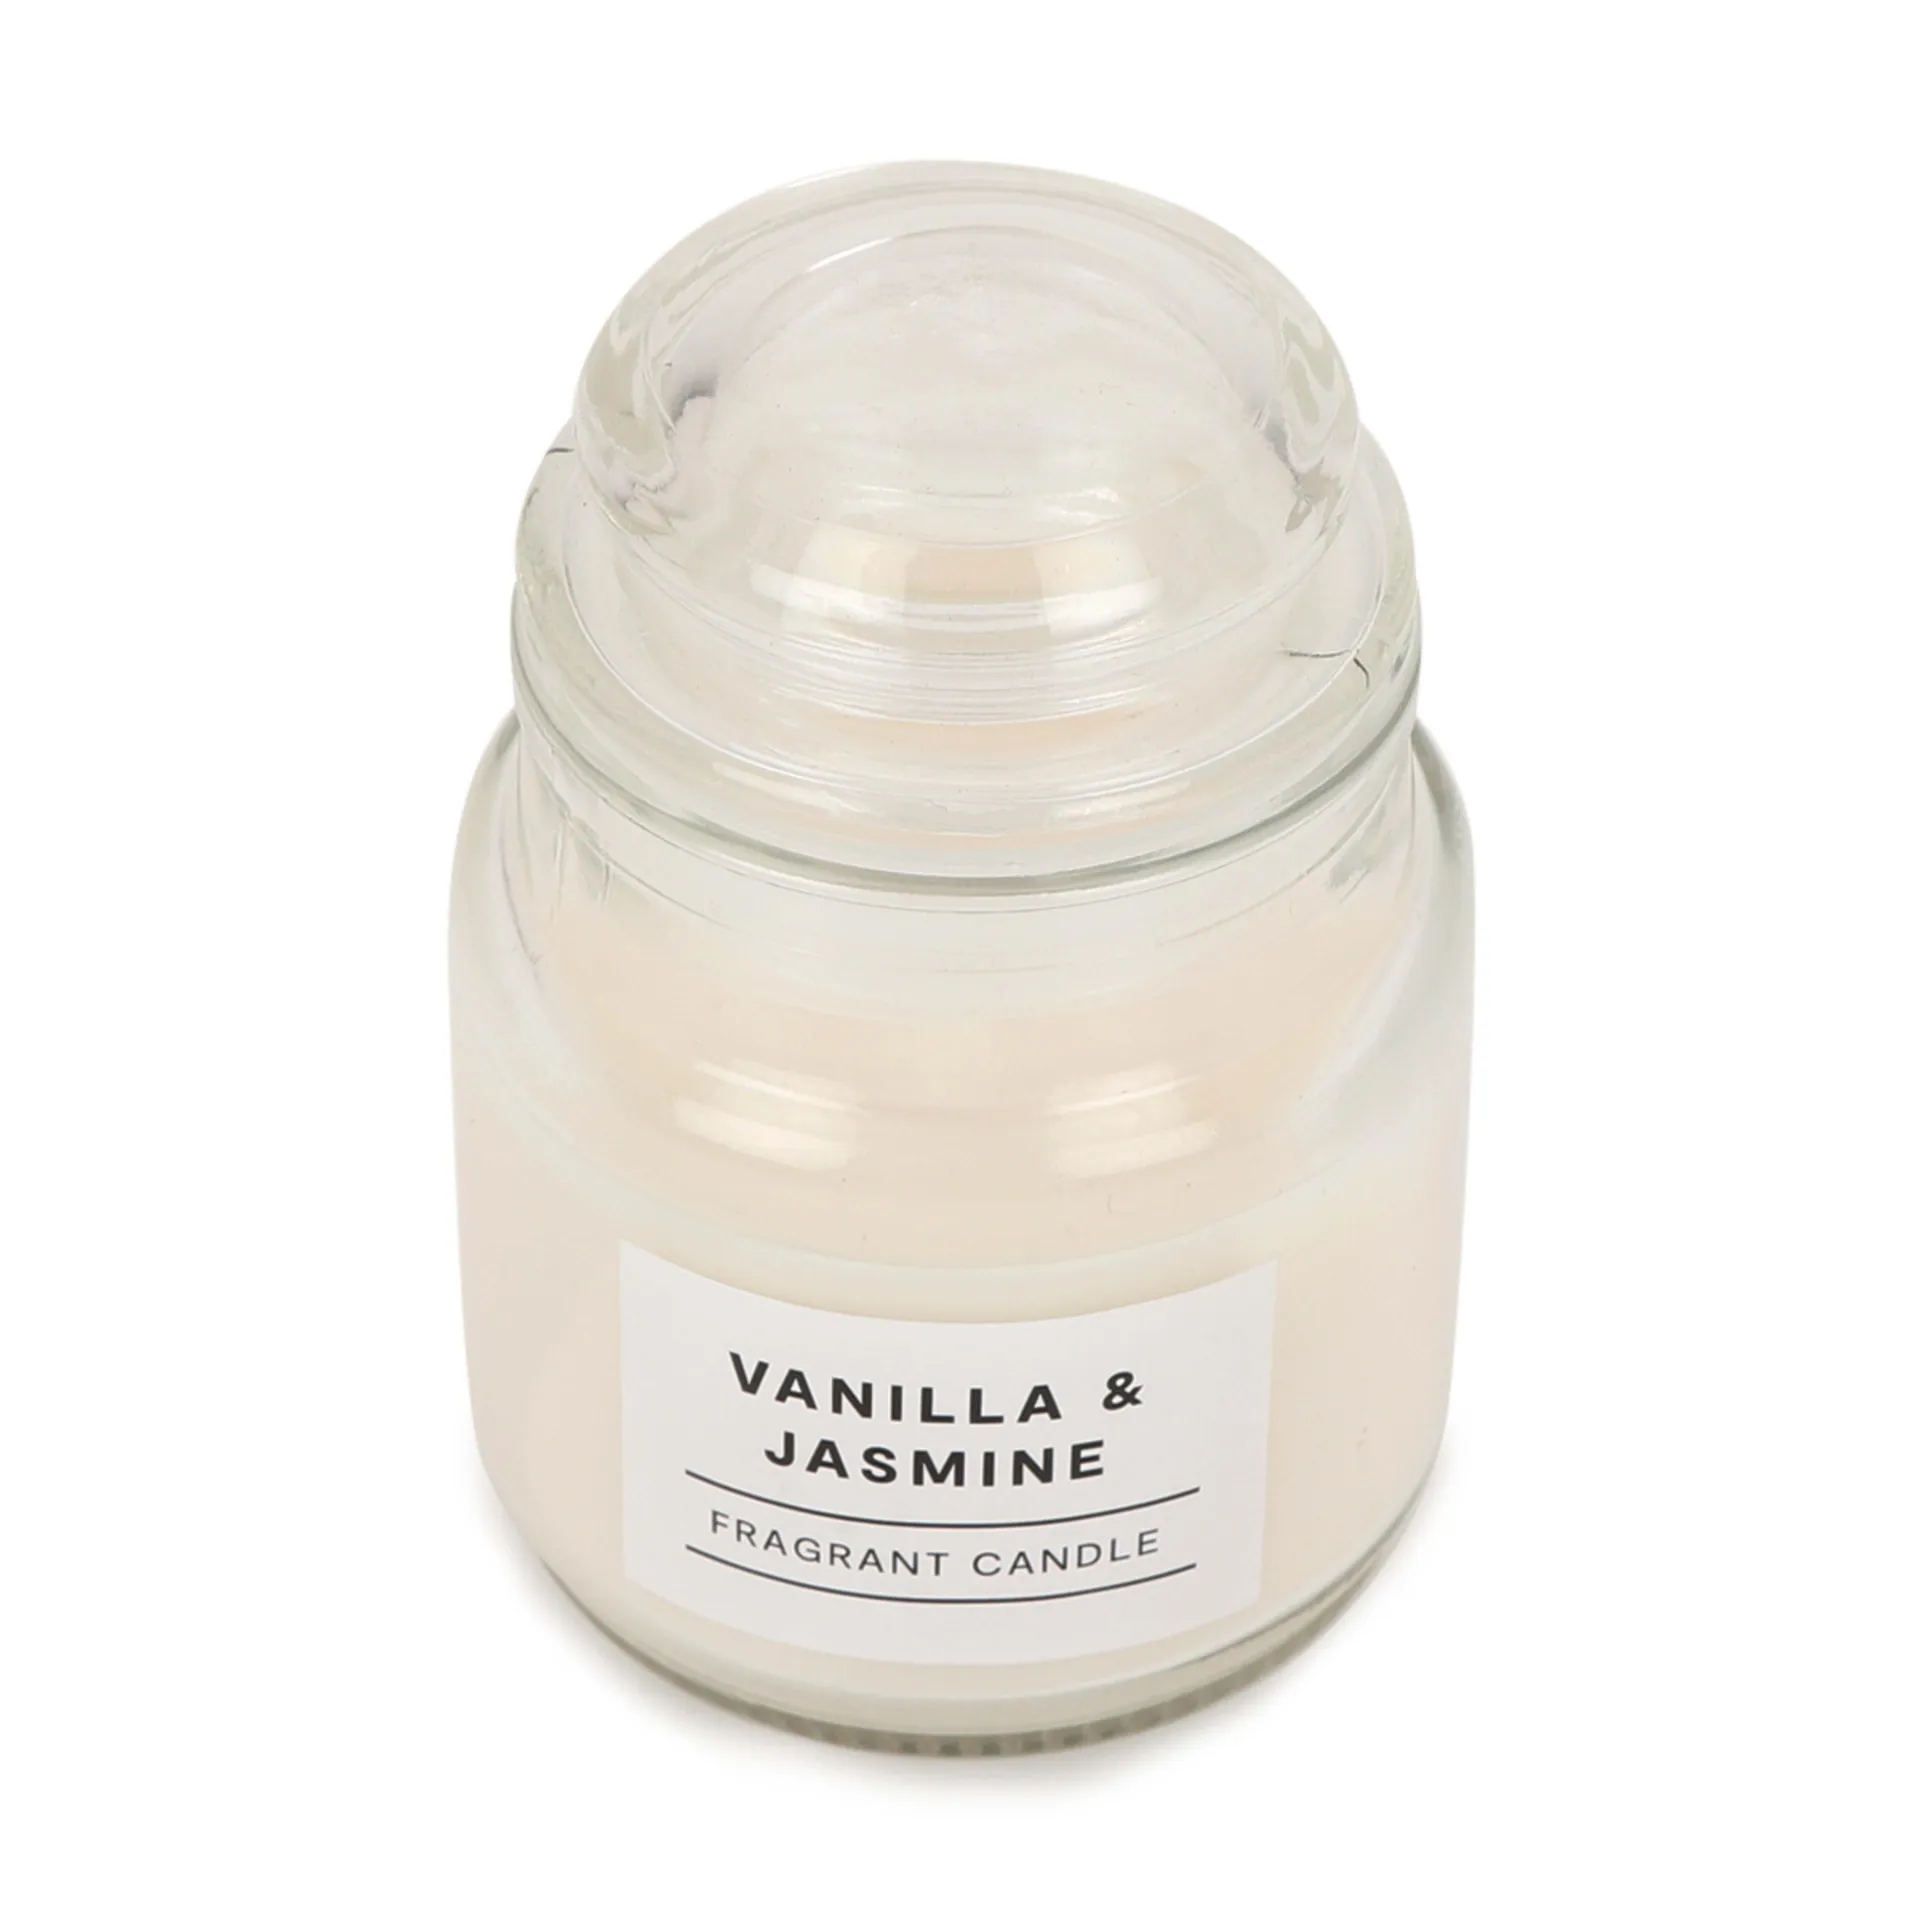 Vanilla and Jasmine Fragrant Candle